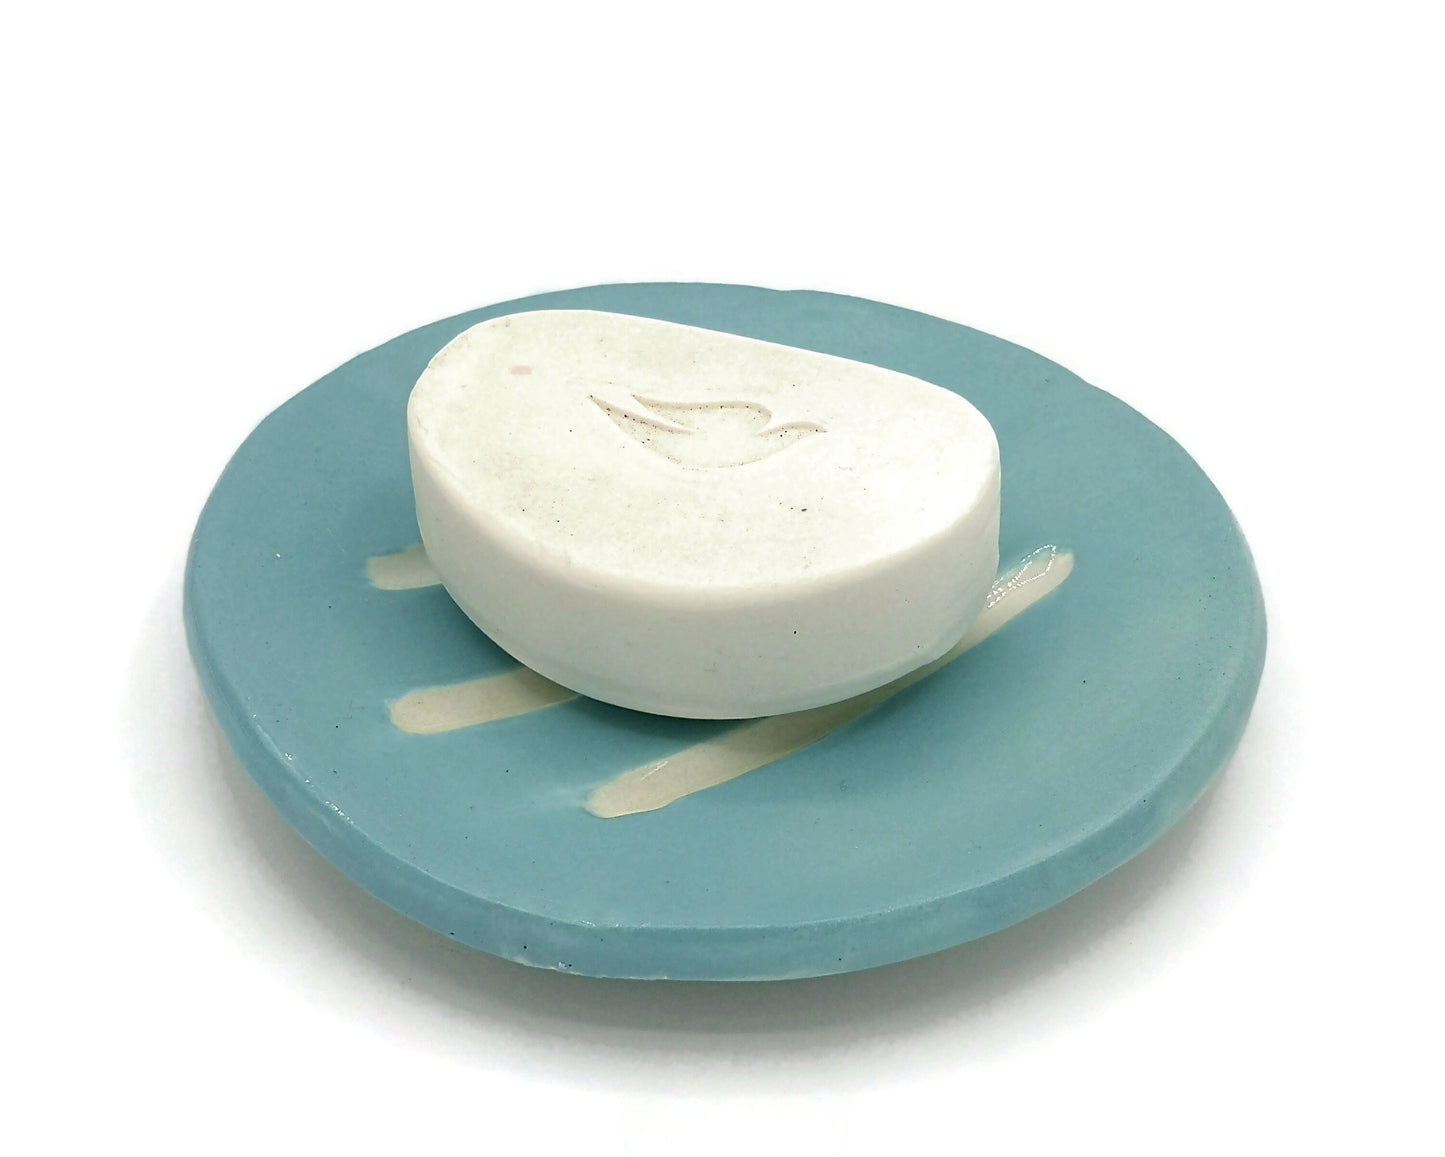 Handmade Ceramic Blue Round Soap Dish With Drain, Draining Soap Bar Holder, Clay Tray, Sustainable Bathroom Accessories - Ceramica Ana Rafael